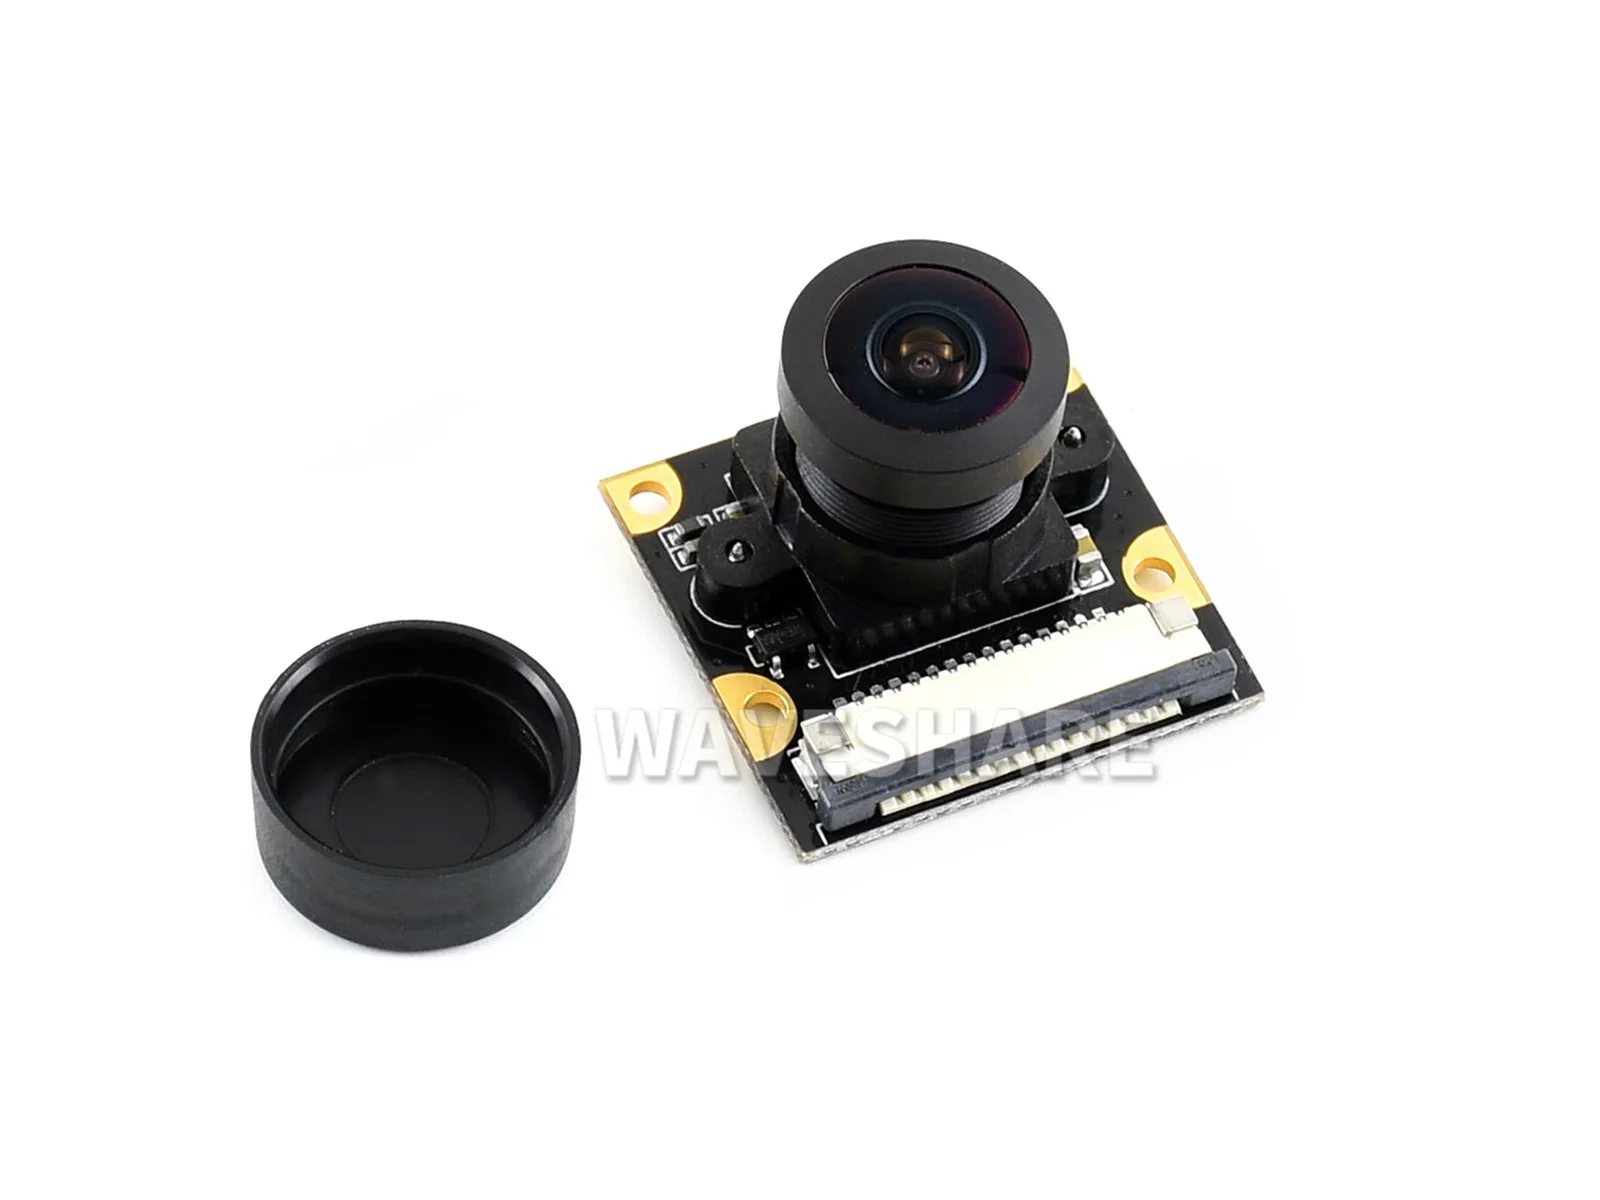 

IMX219-160 Camera,Applicable for Jetson Nano, 8 Megapixels, 160 FOV,Compatible with Raspberry Pi and Jetson Nano series boards